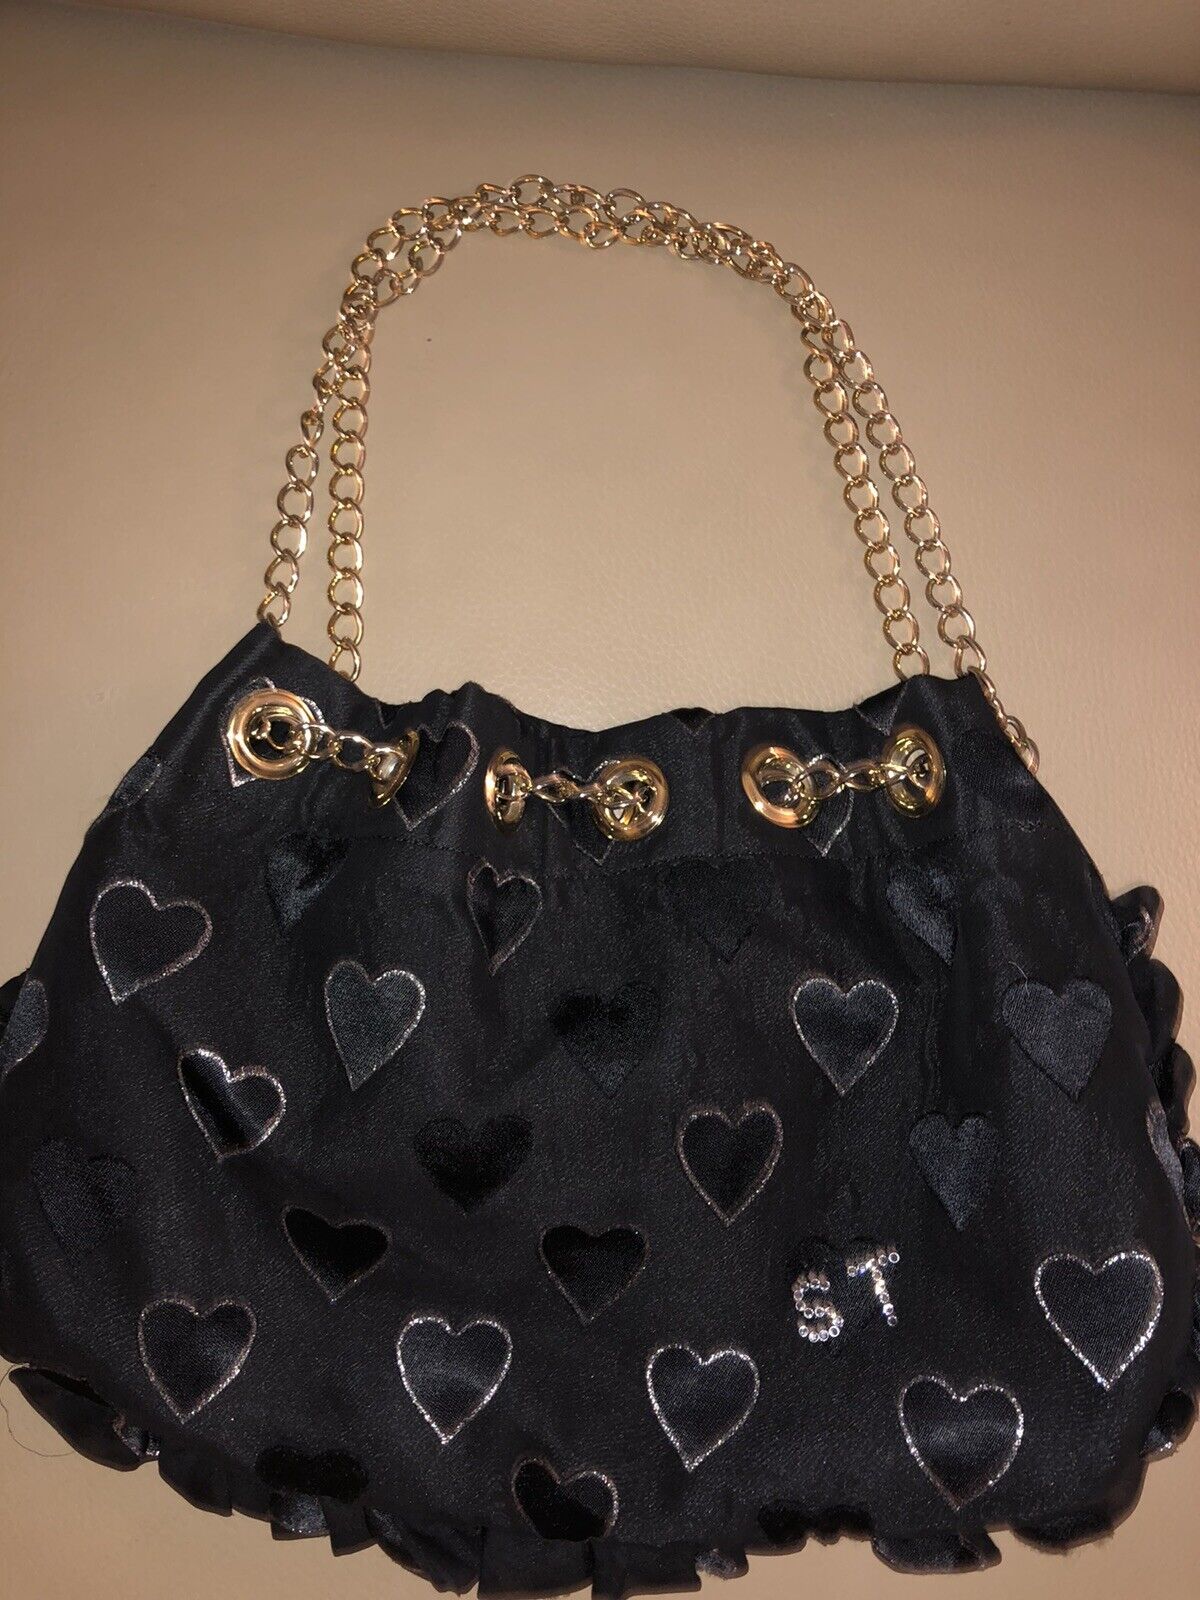 Samantha Thavasa Black Satin Hearts Chain Handbag - image 2